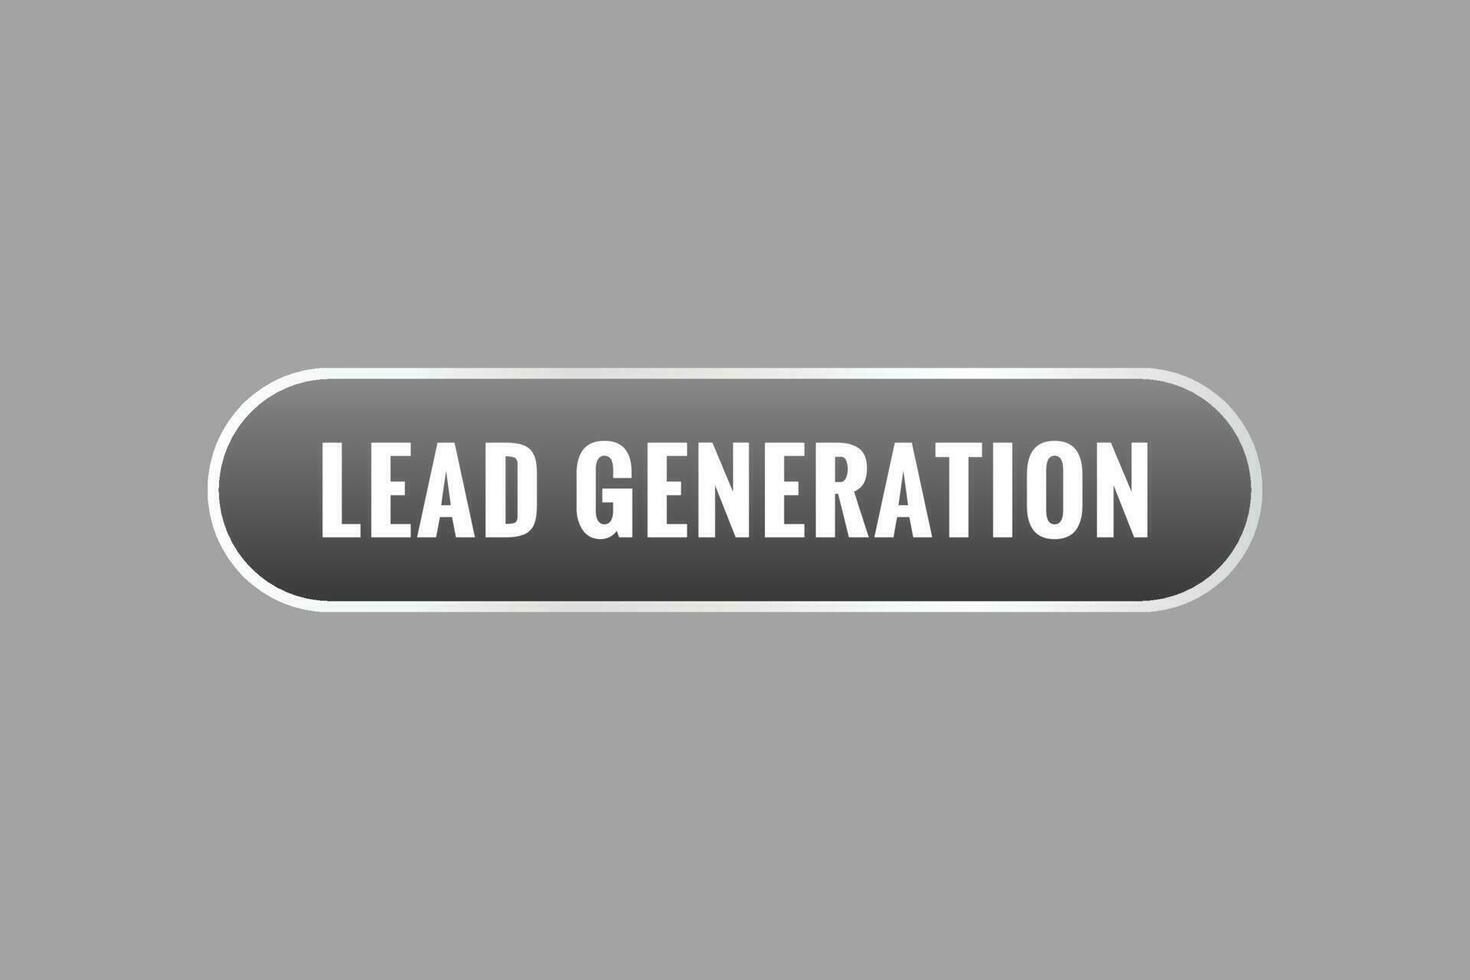 Lead Generation Button. Speech Bubble, Banner Label Lead Generation vector